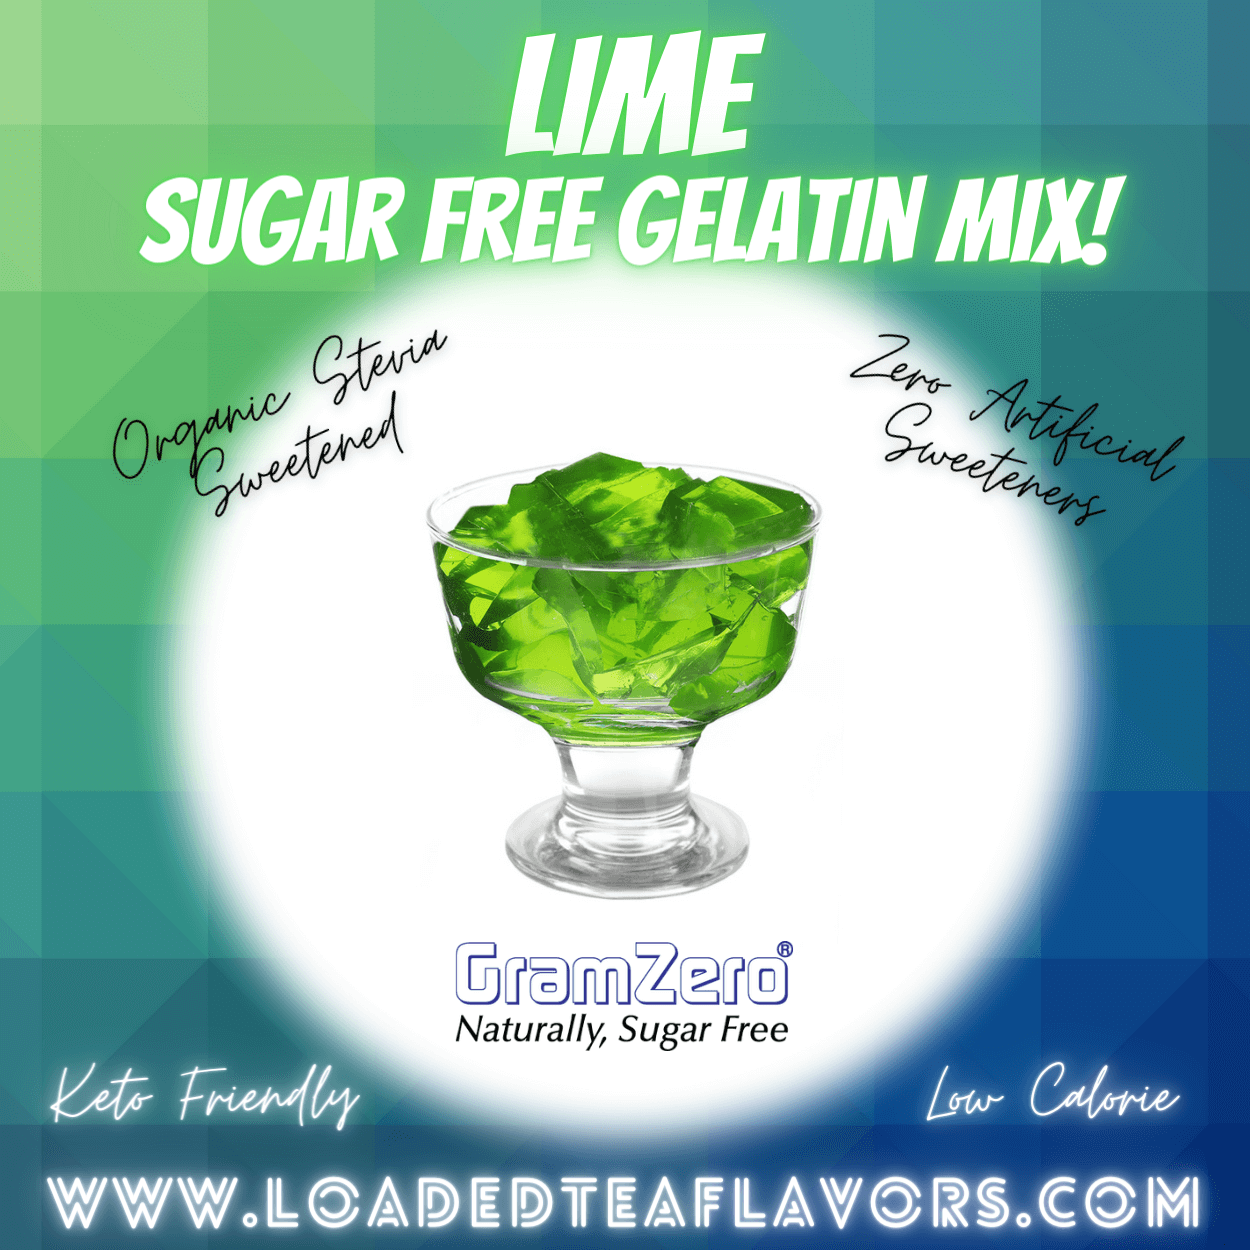 Gramzero Lime Sugar Free Gelatin Mix Stevia Sweetened Low Calorie Keto Friendly